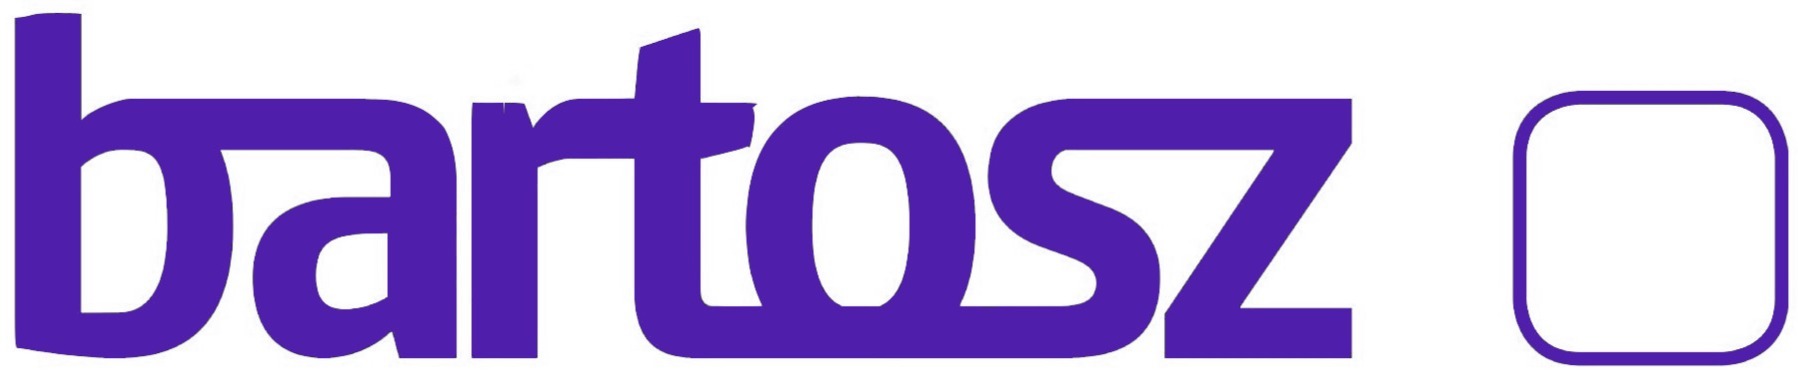 Logo Bartosz